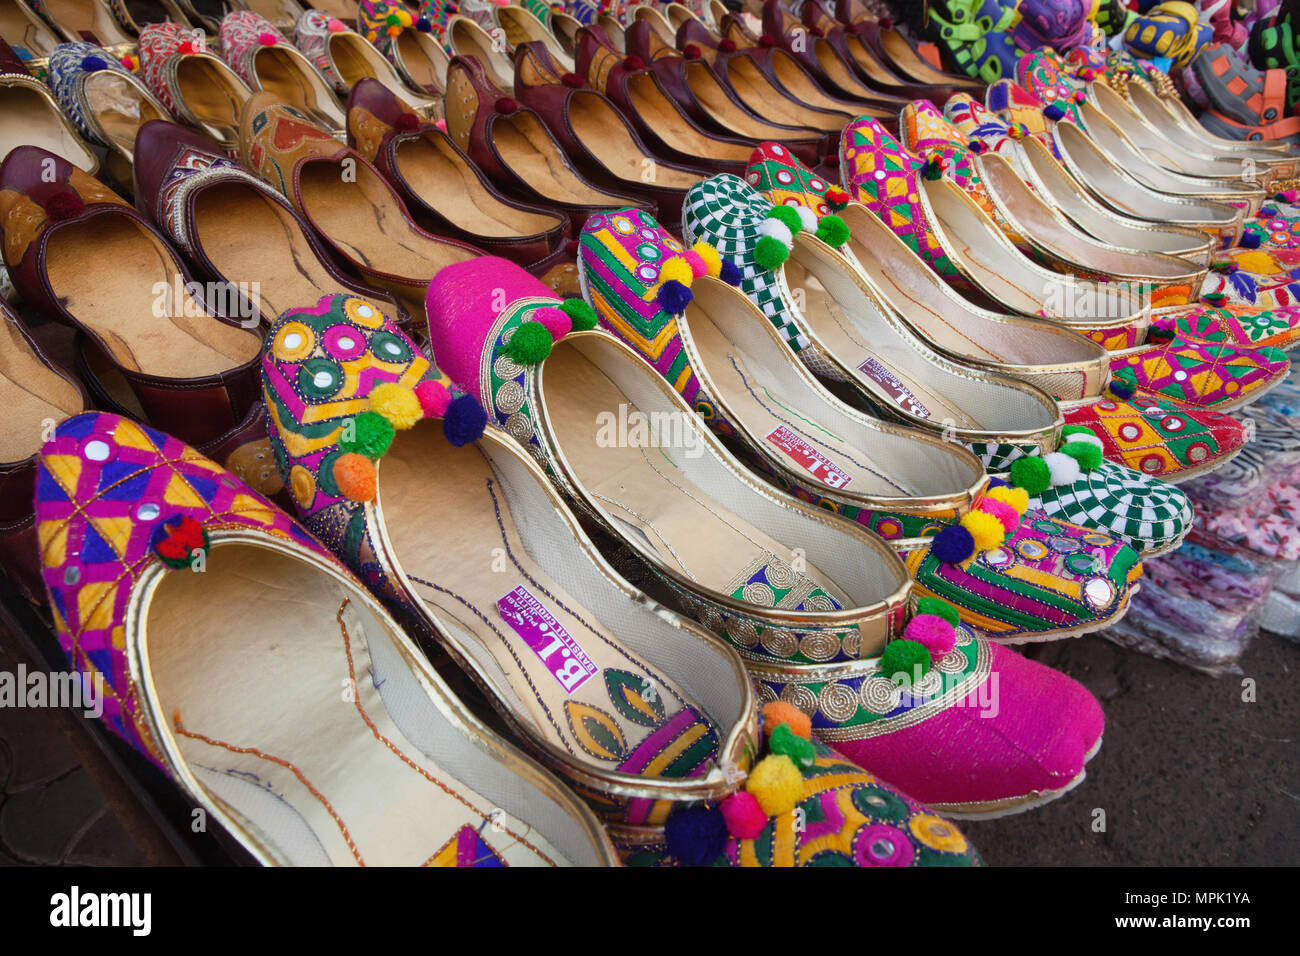 https://c8.alamy.com/comp/MPK1YA/india-west-bengal-kolkata-display-of-traditional-ladies-footwear-mojaris-and-jootis-in-a-shop-in-new-market-MPK1YA.jpg